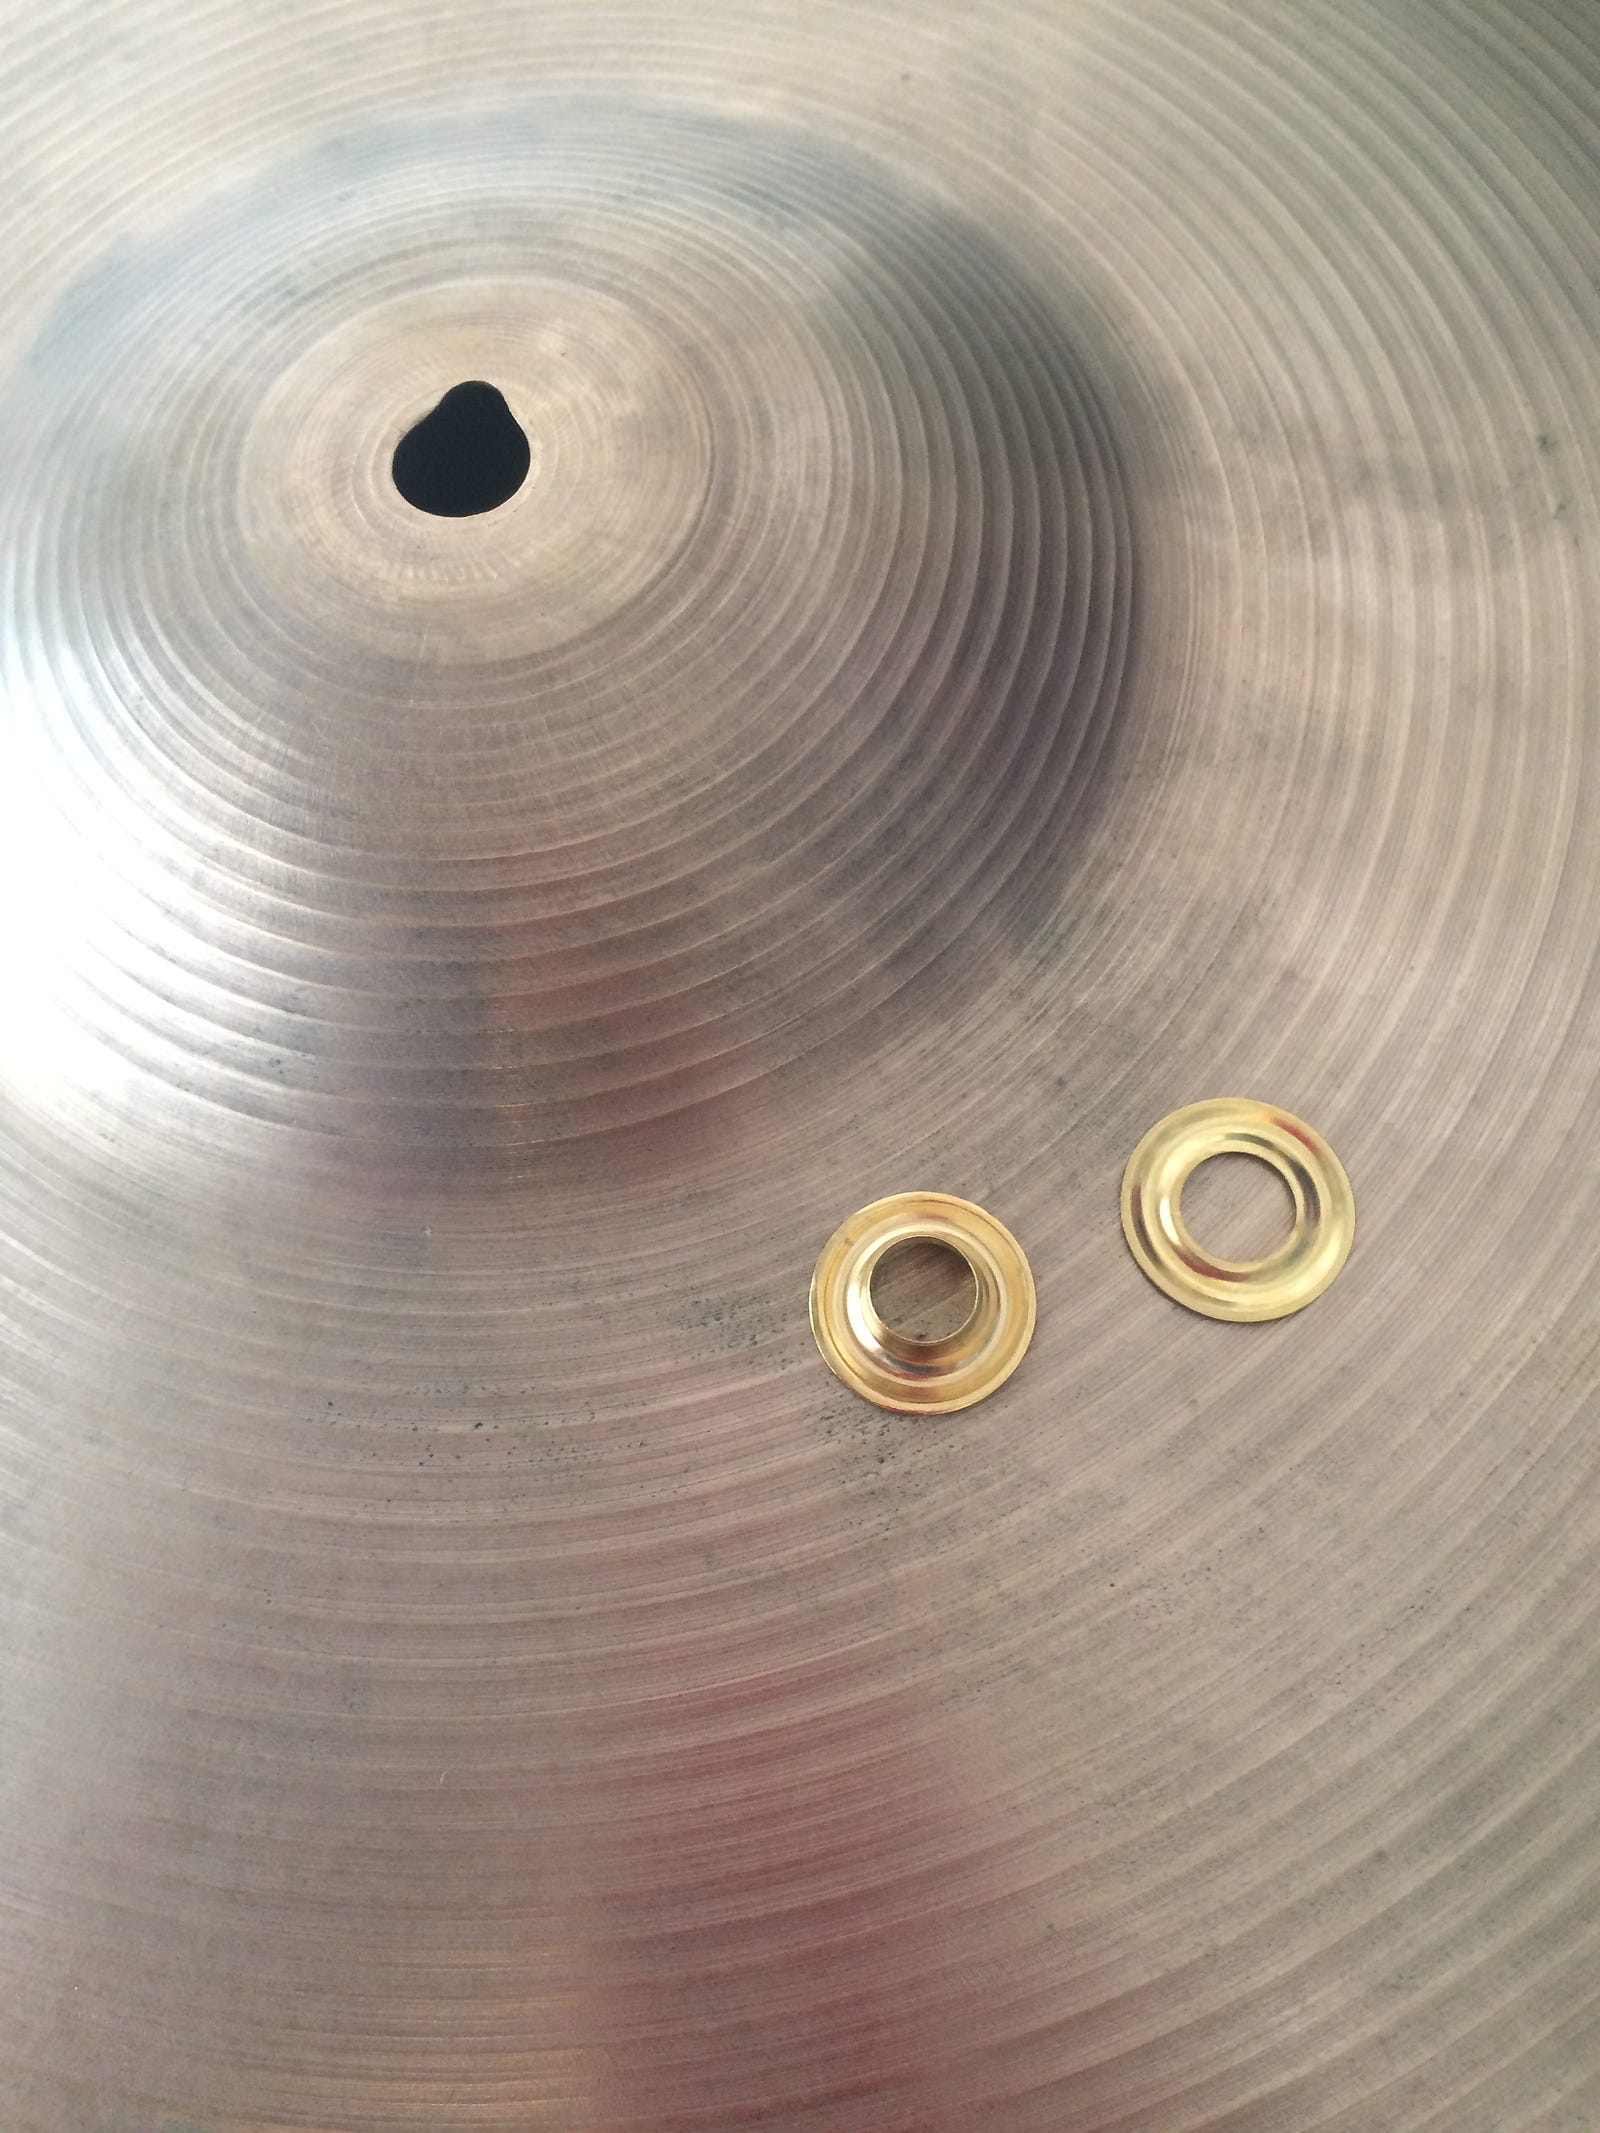 Repairing a Cymbal with a Keyhole Notch – Chris Kania – Medium